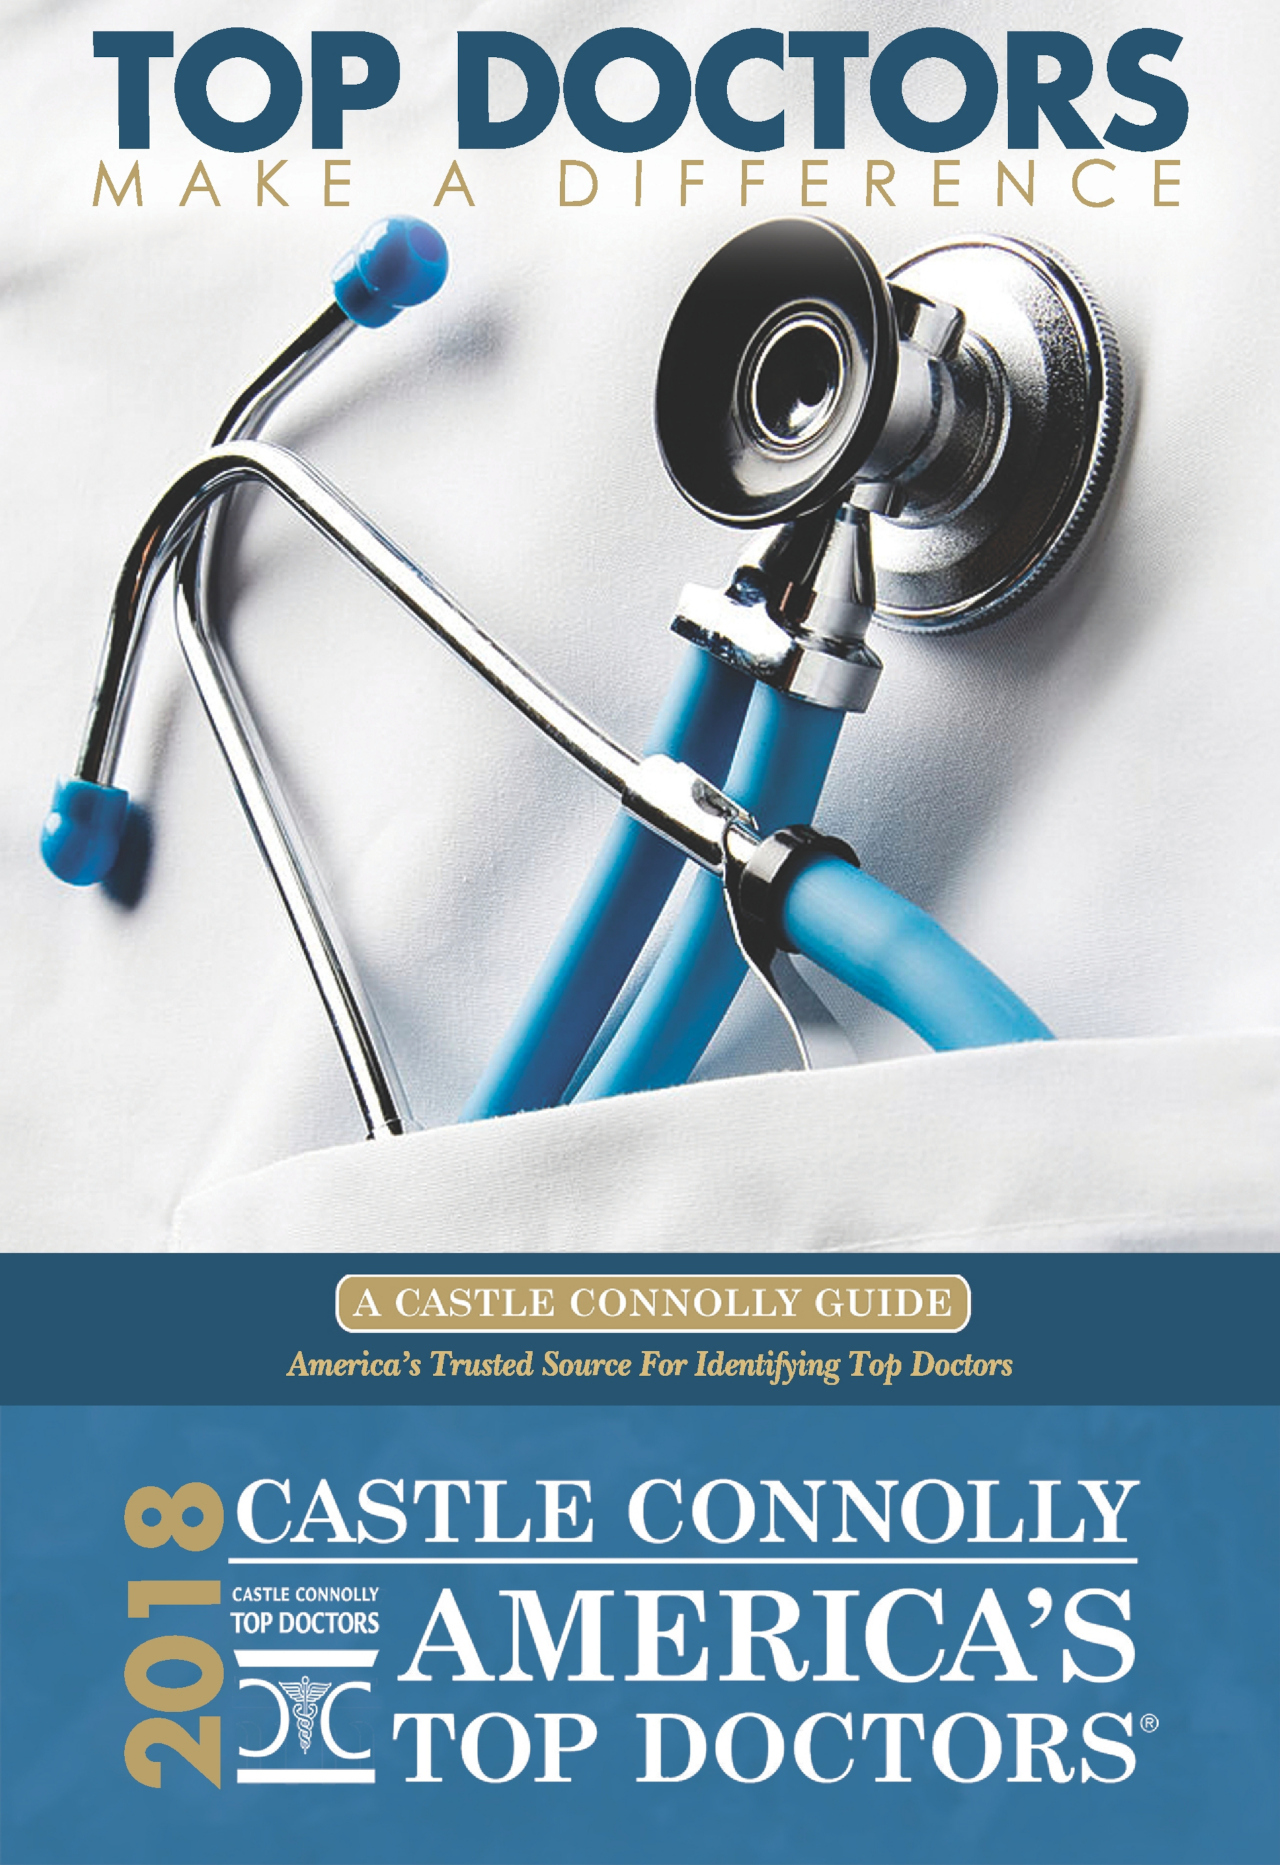 America's Top Doctors - Castle Connolly - 2018 